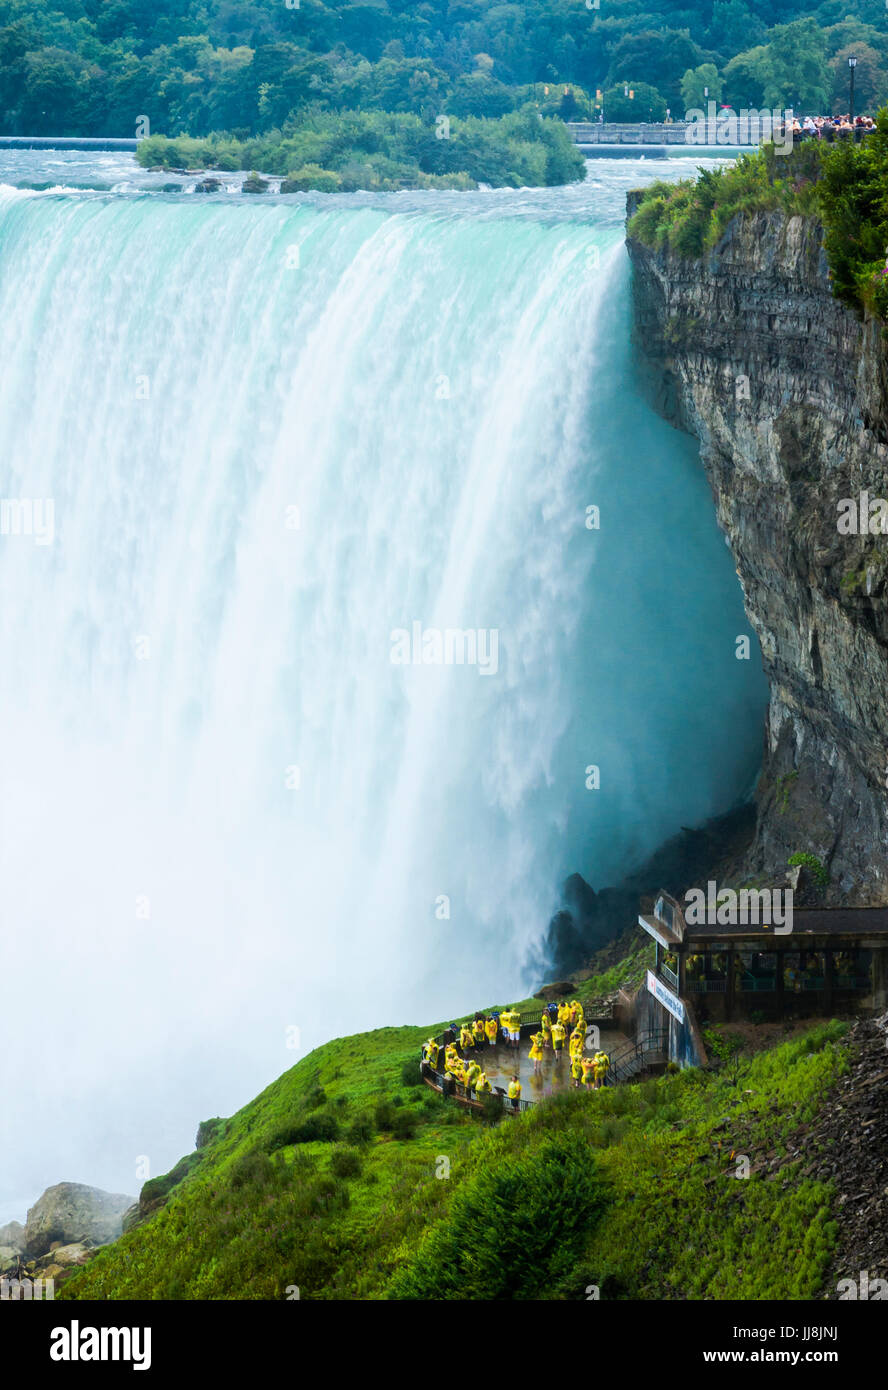 Falls canada niagara Visit Niagara